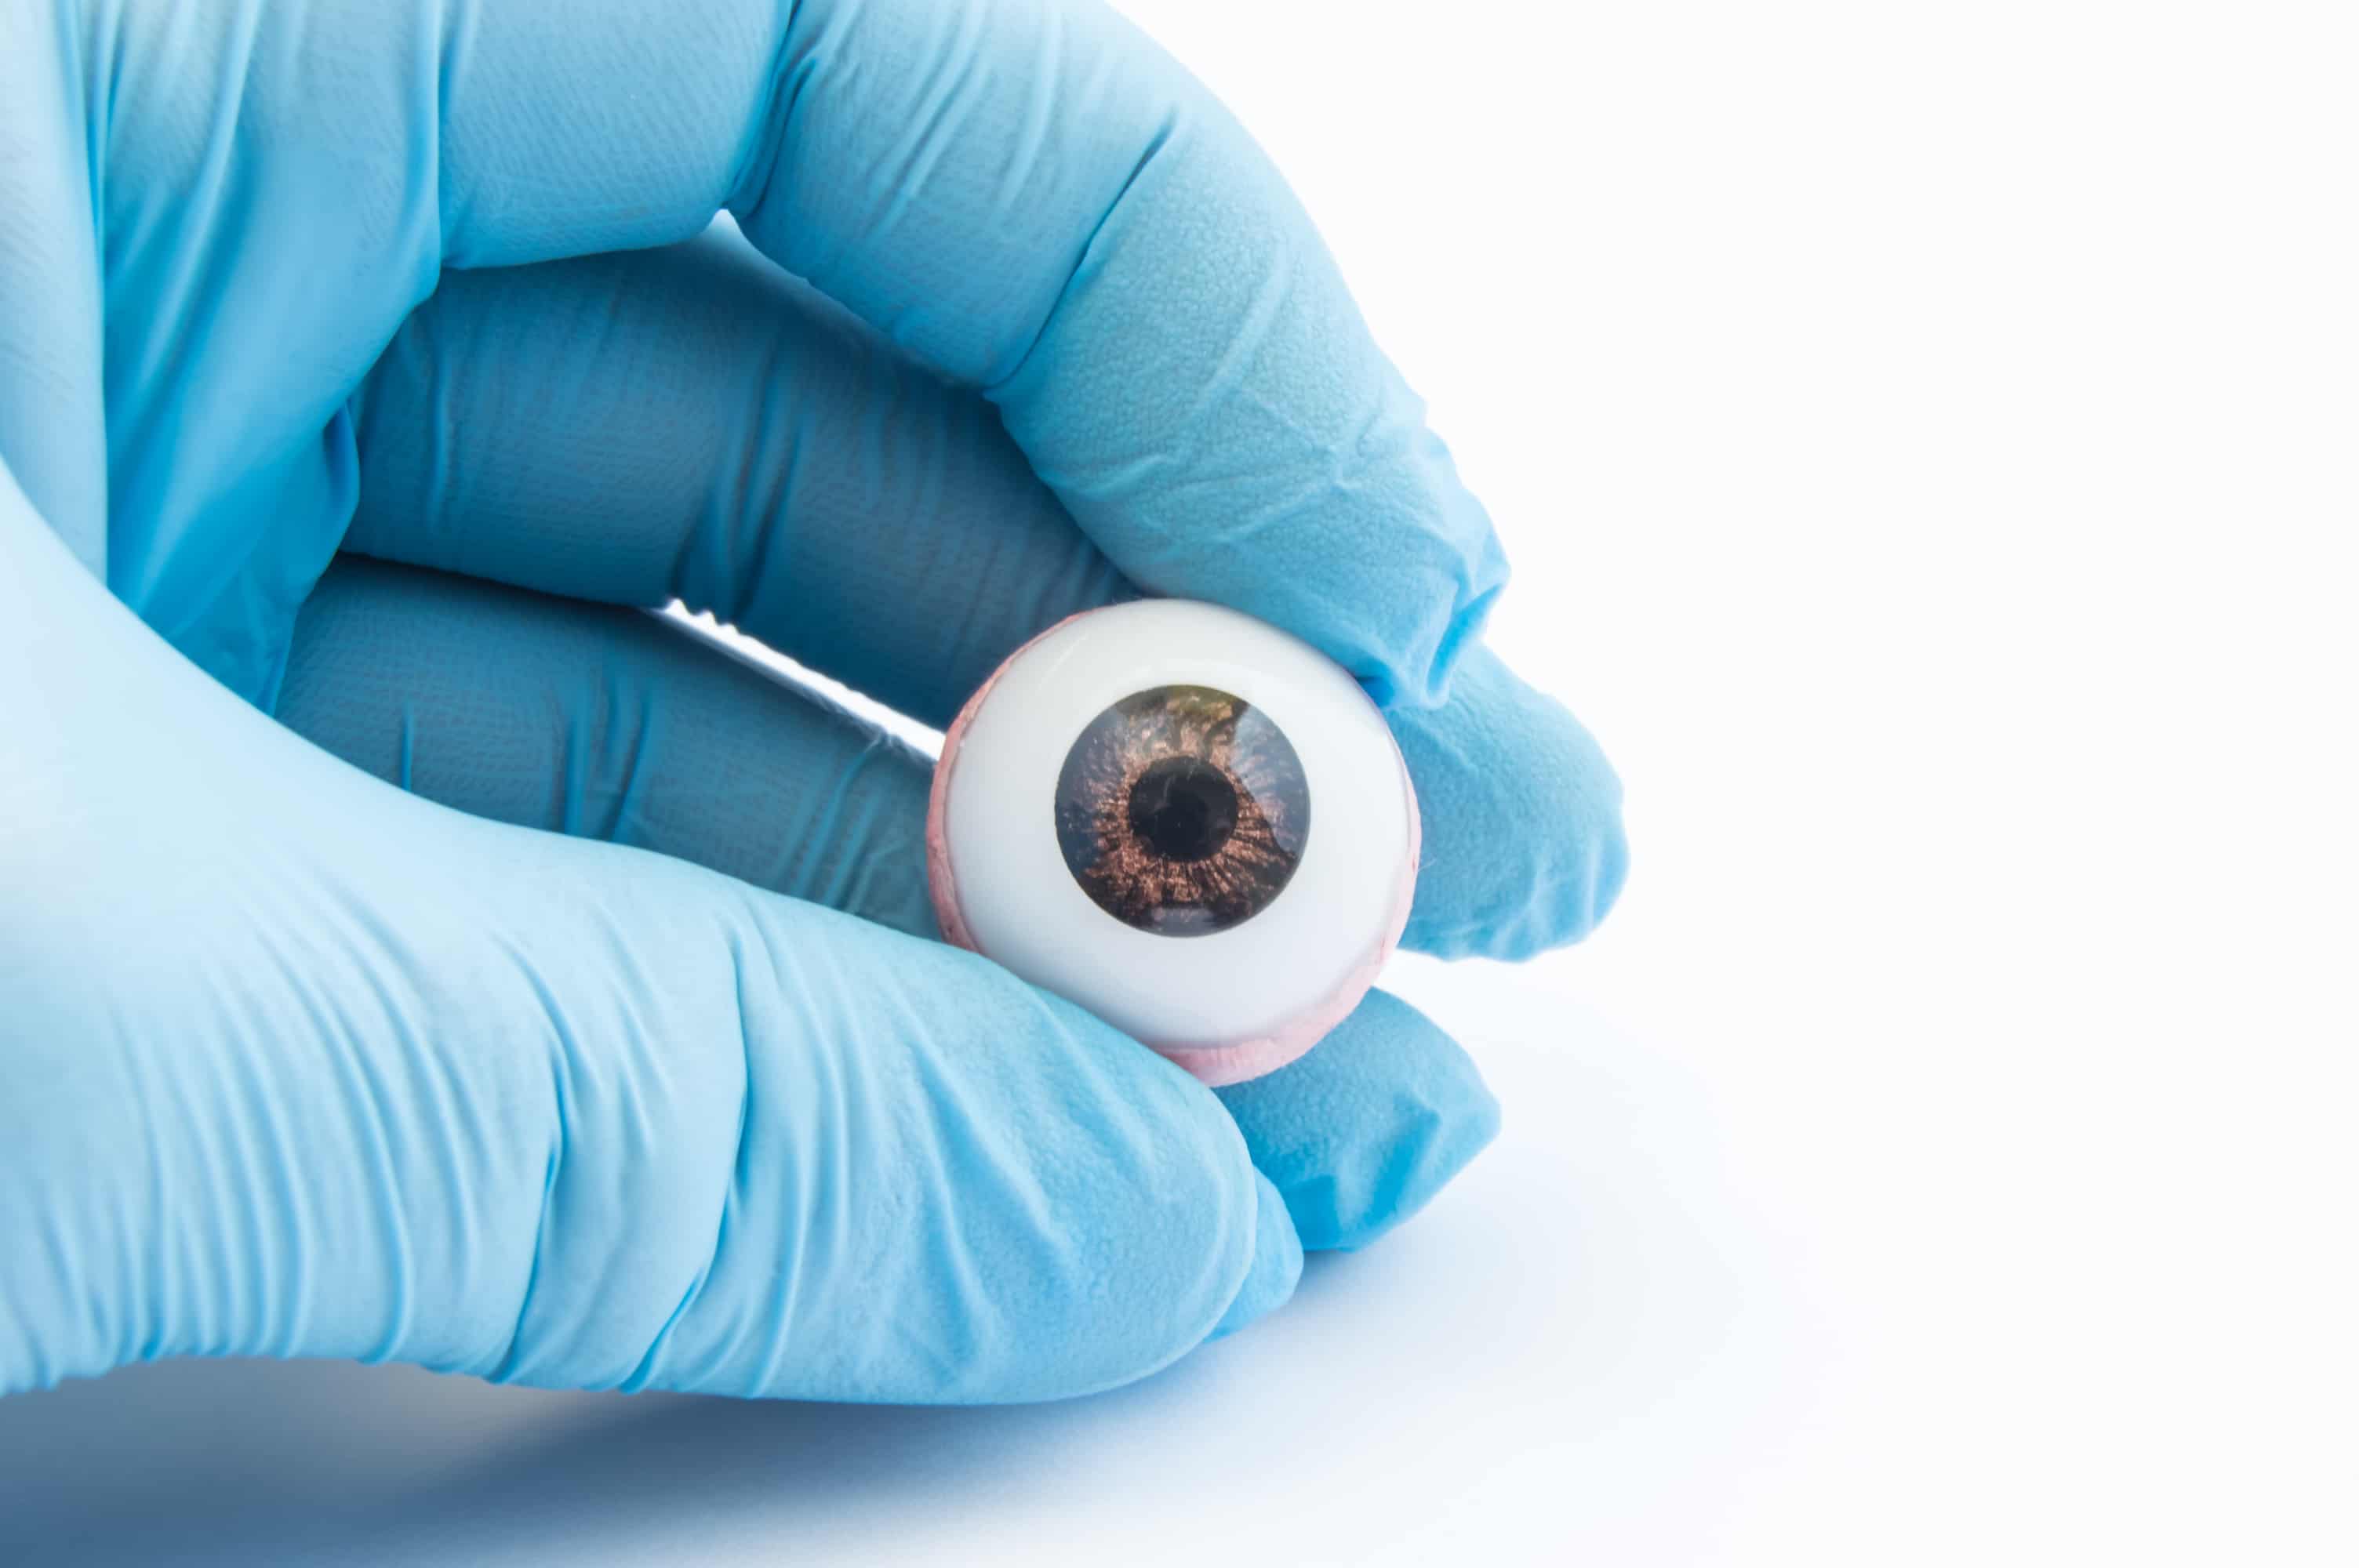 Ocular prosthesis turkey